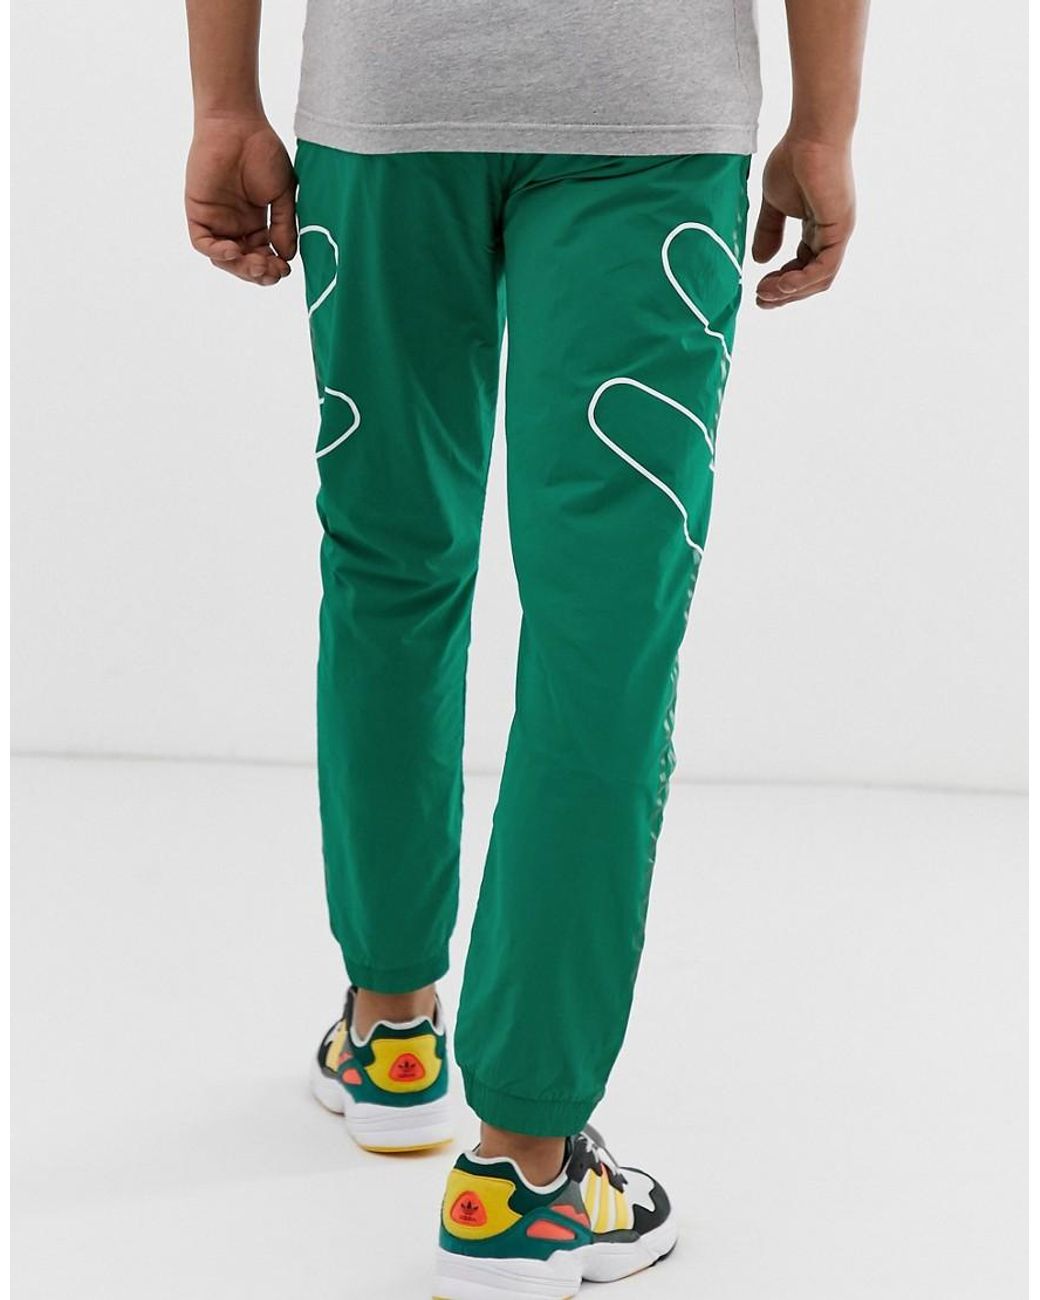 Flamestrike Pantalon De Jogging Vert Adidas Originals Pour, 46% OFF